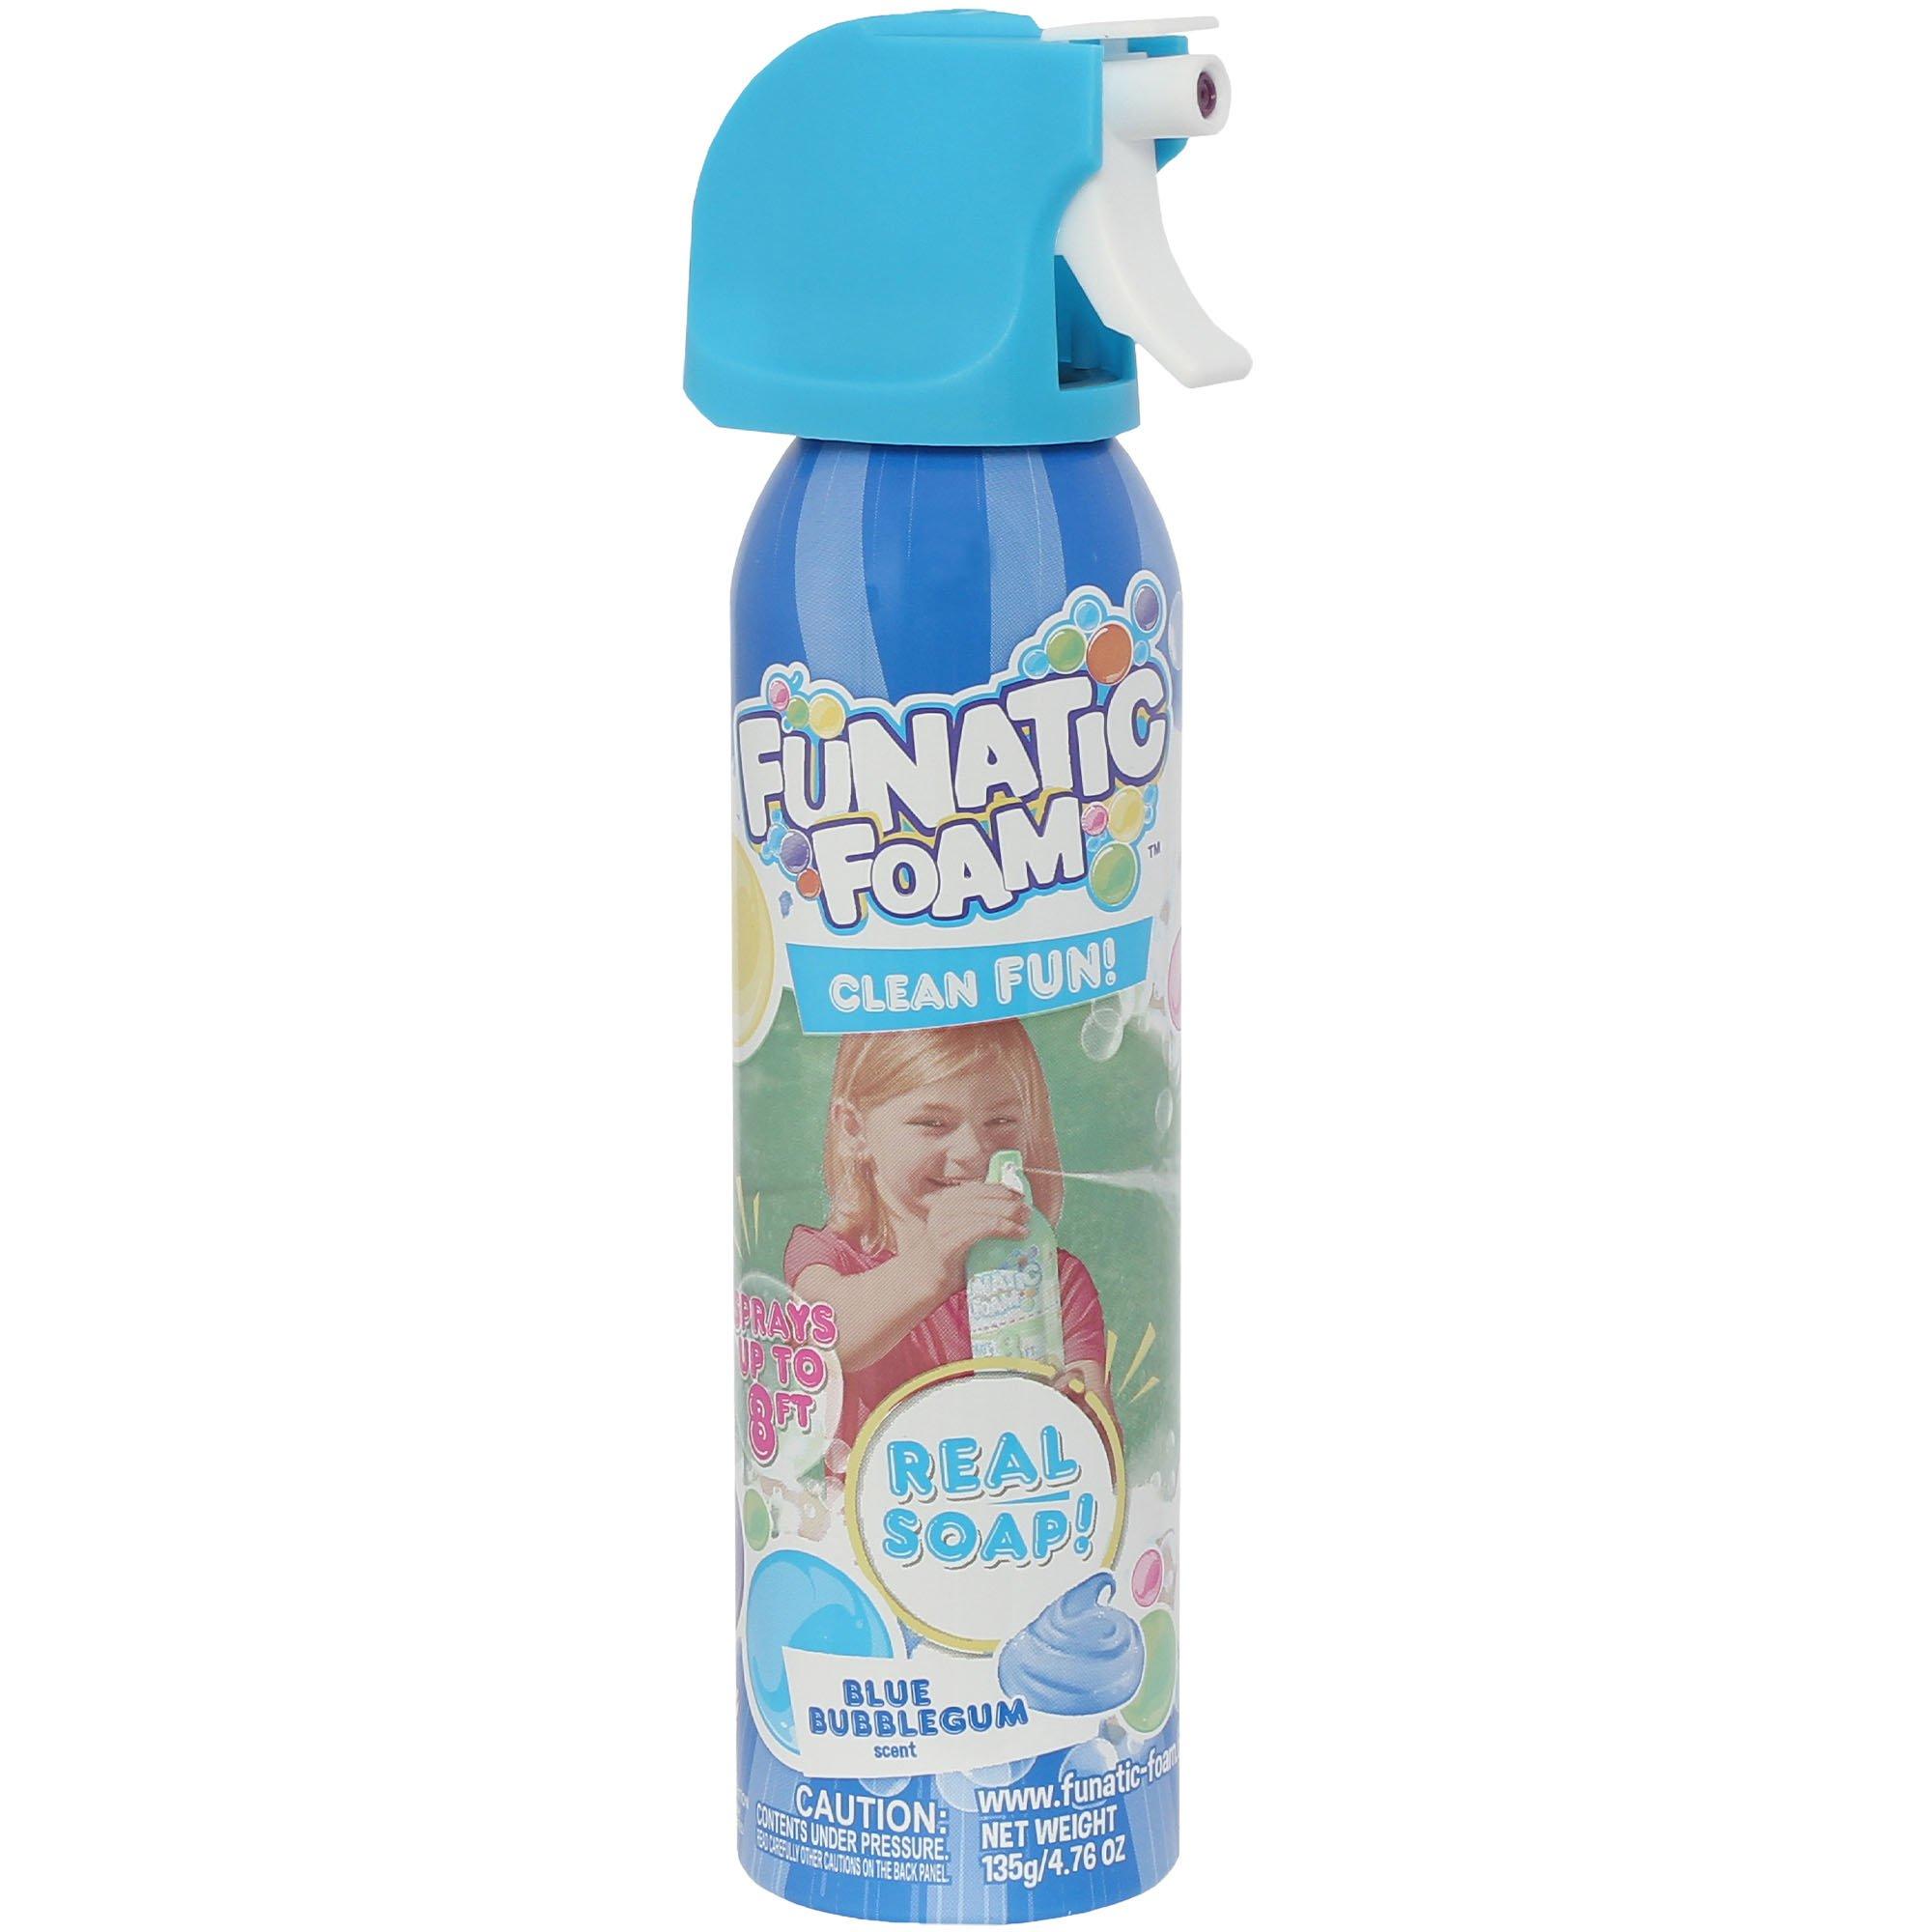 Scented Funatic Foam Spray Can, 4.7oz